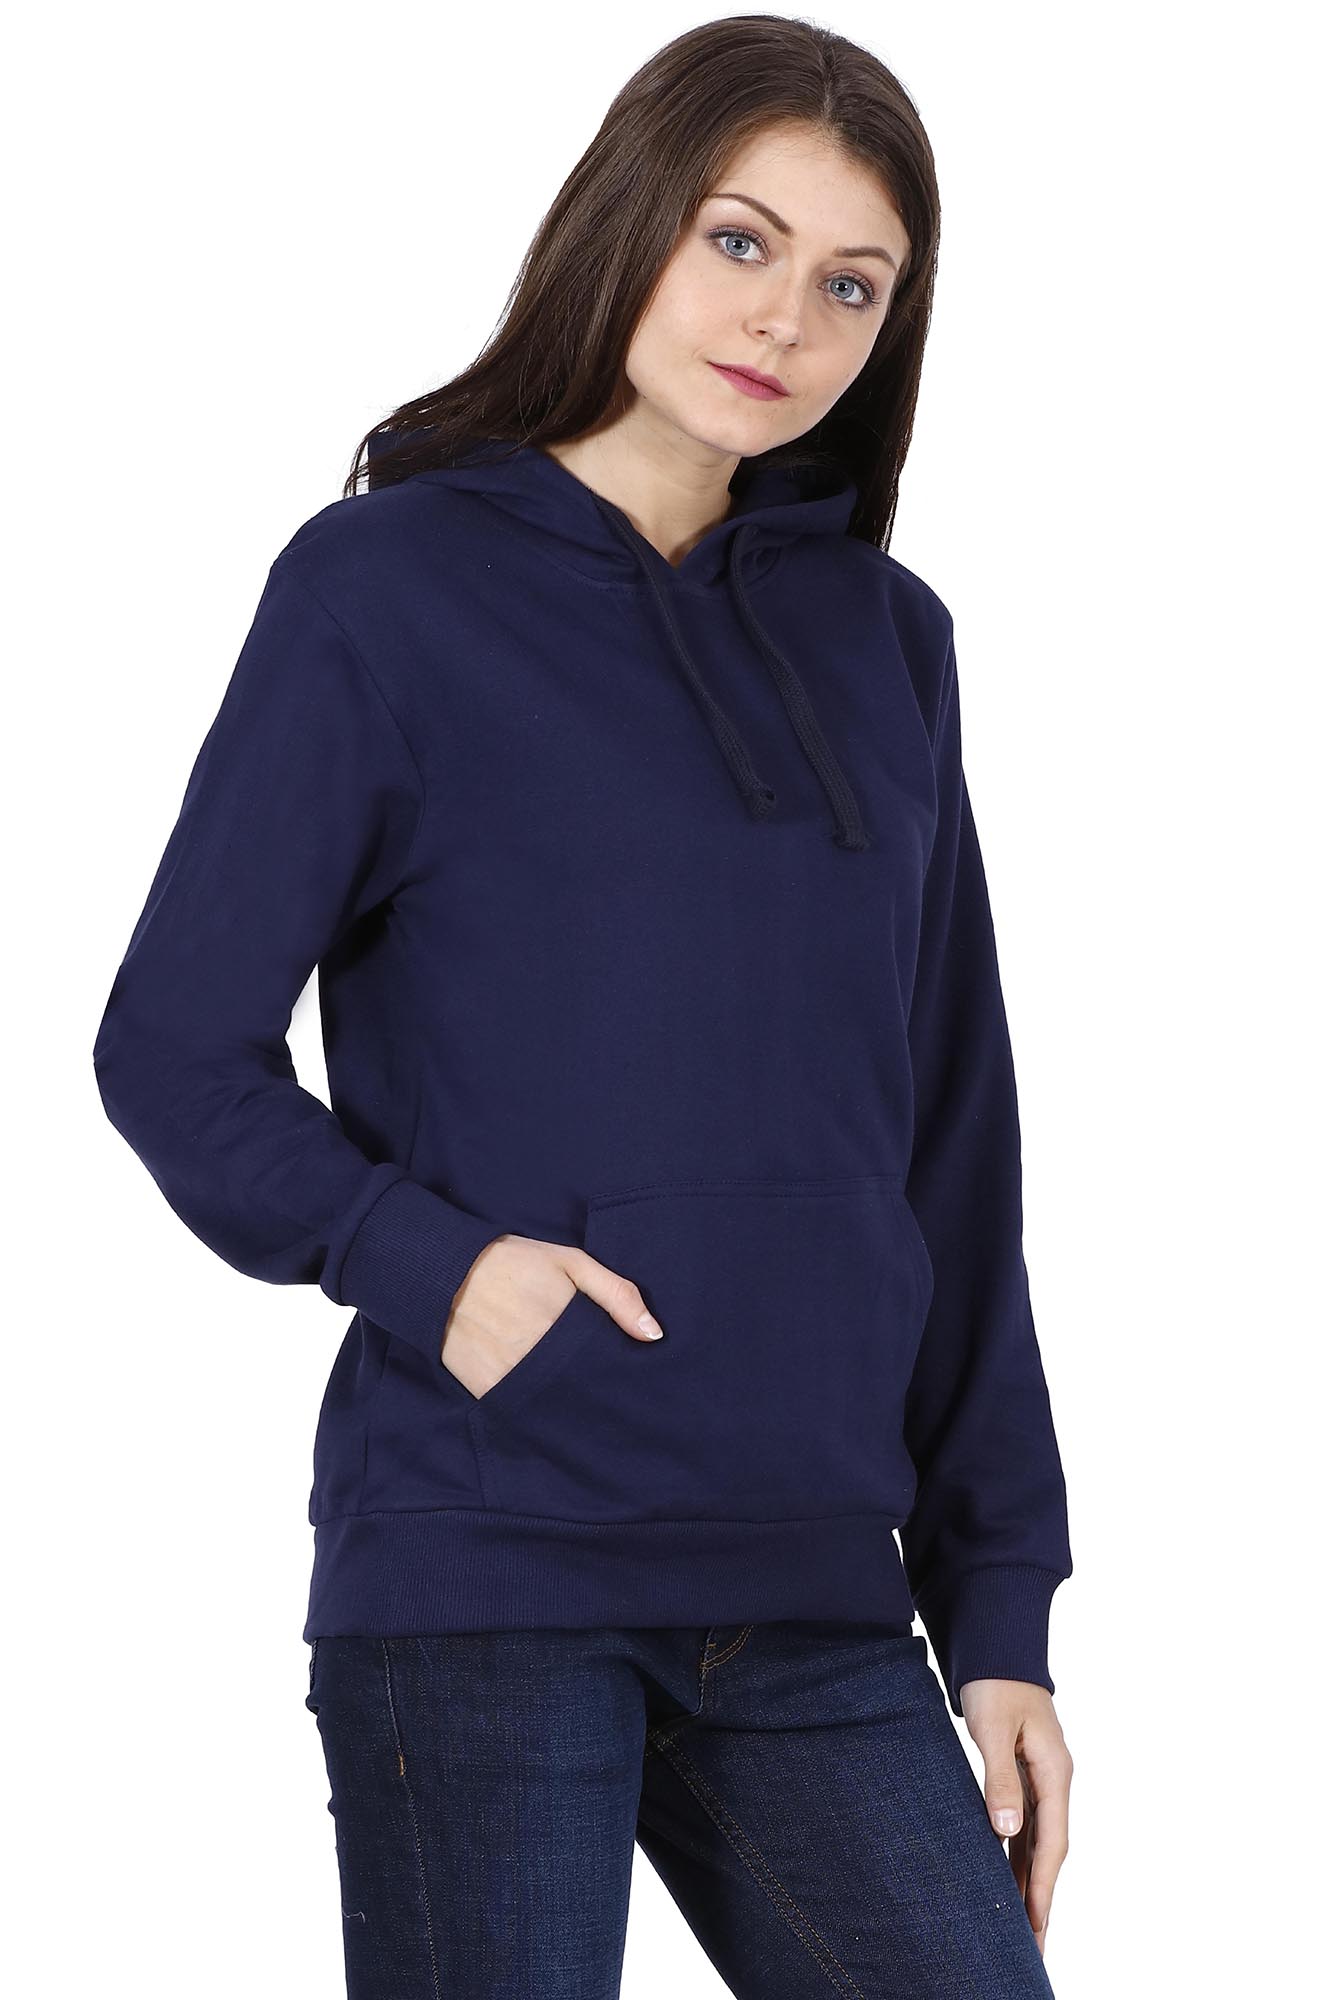 Women's Navy Blue Hoodie Sweatshirt